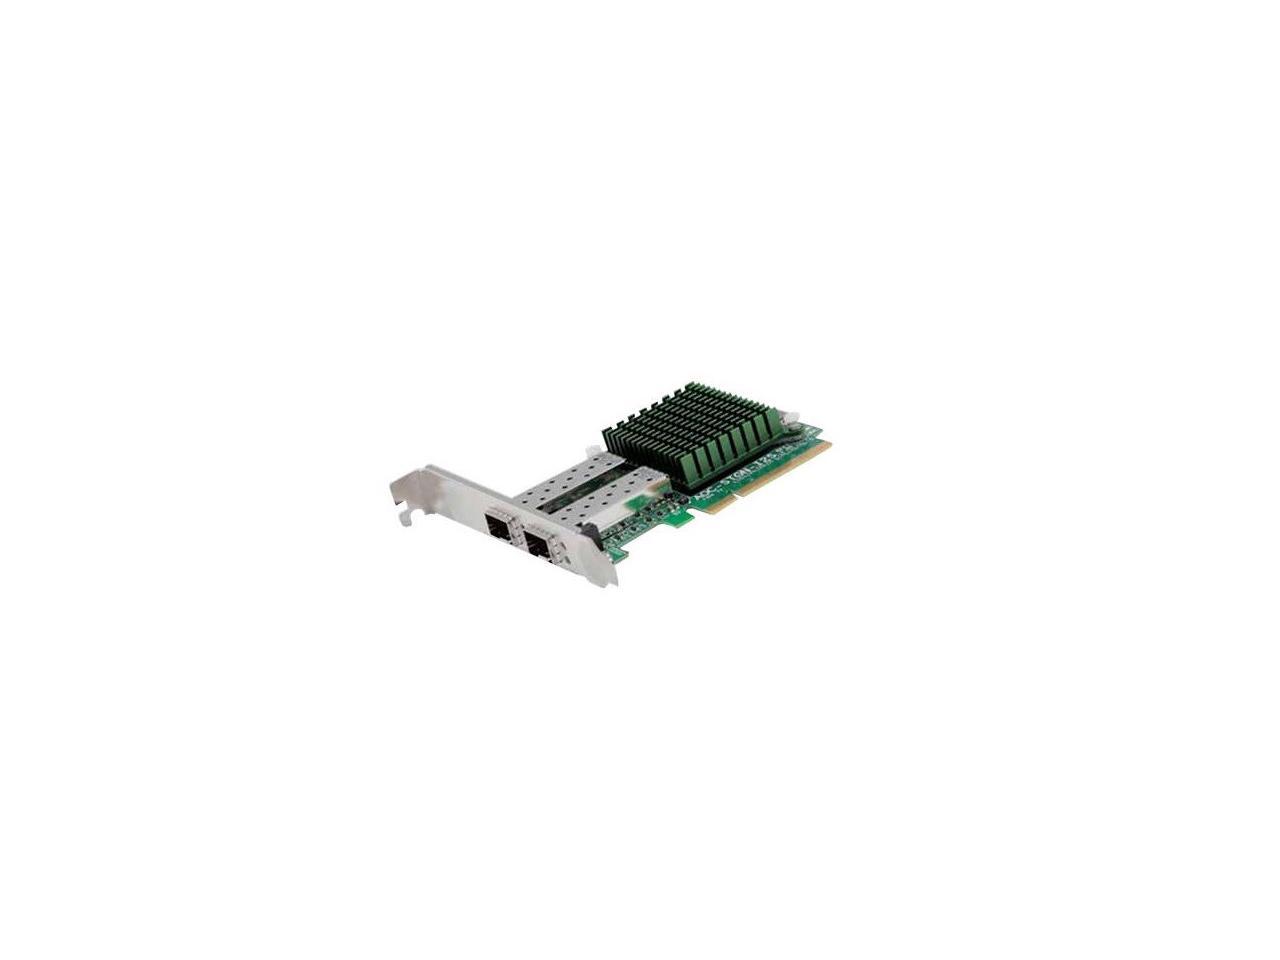 AOC-stgn-i2s Supermicro Rev 2.0 dual Port 10 Gigabit Ethernet Card 